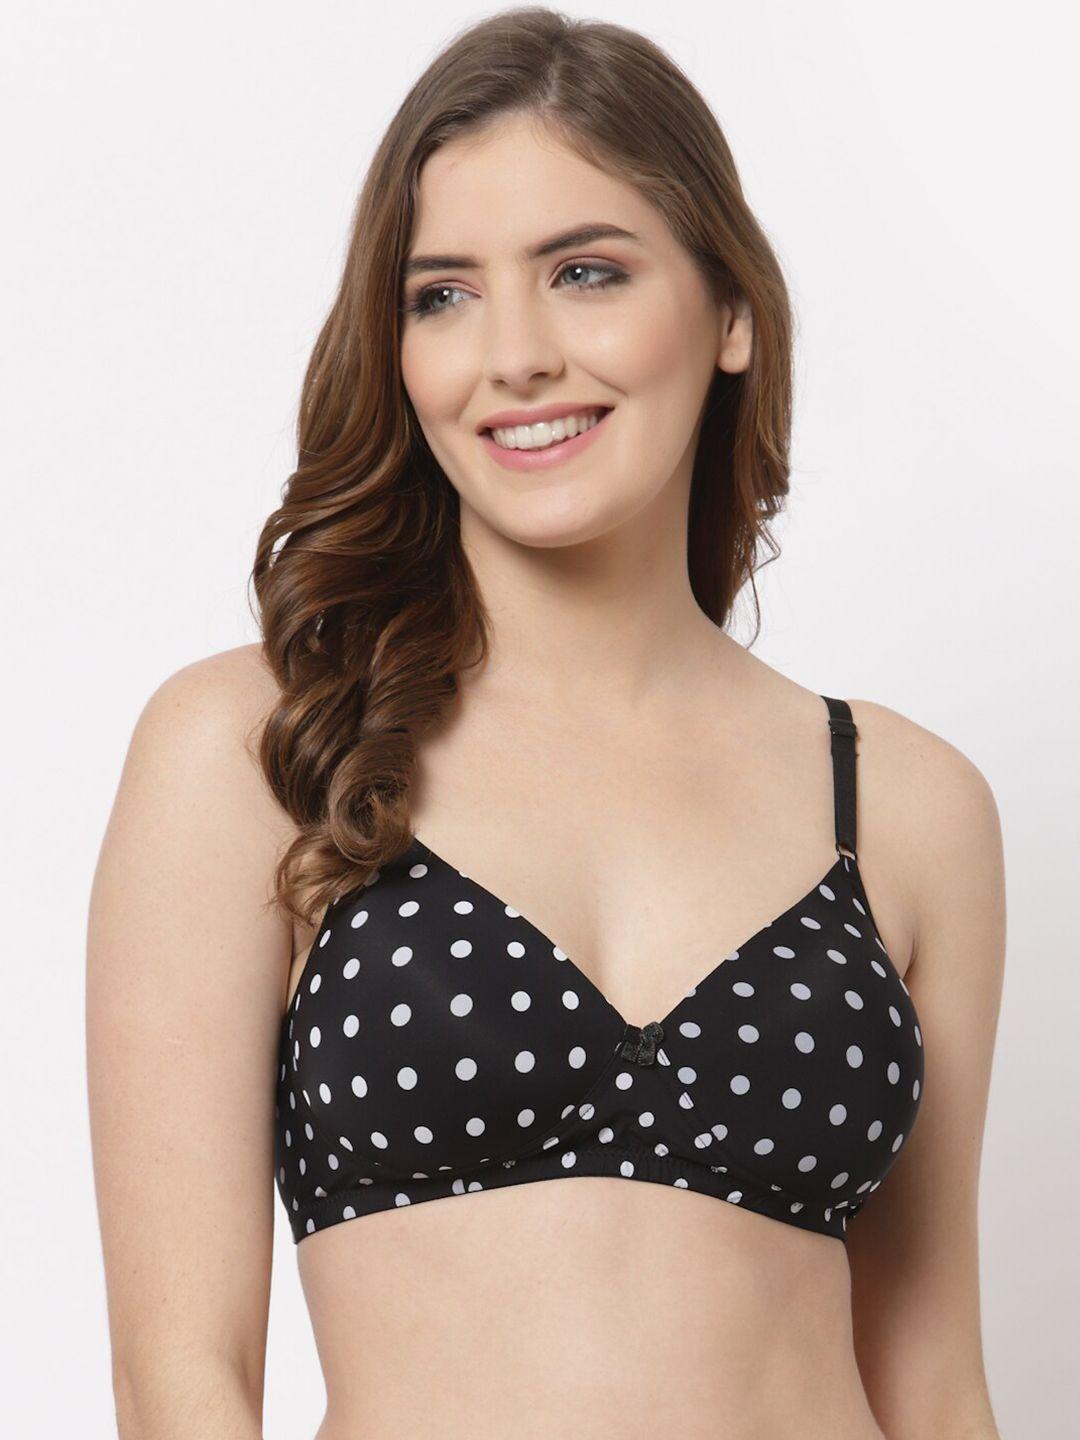 cukoo black & white polka dots printed everyday bra - lightly padded